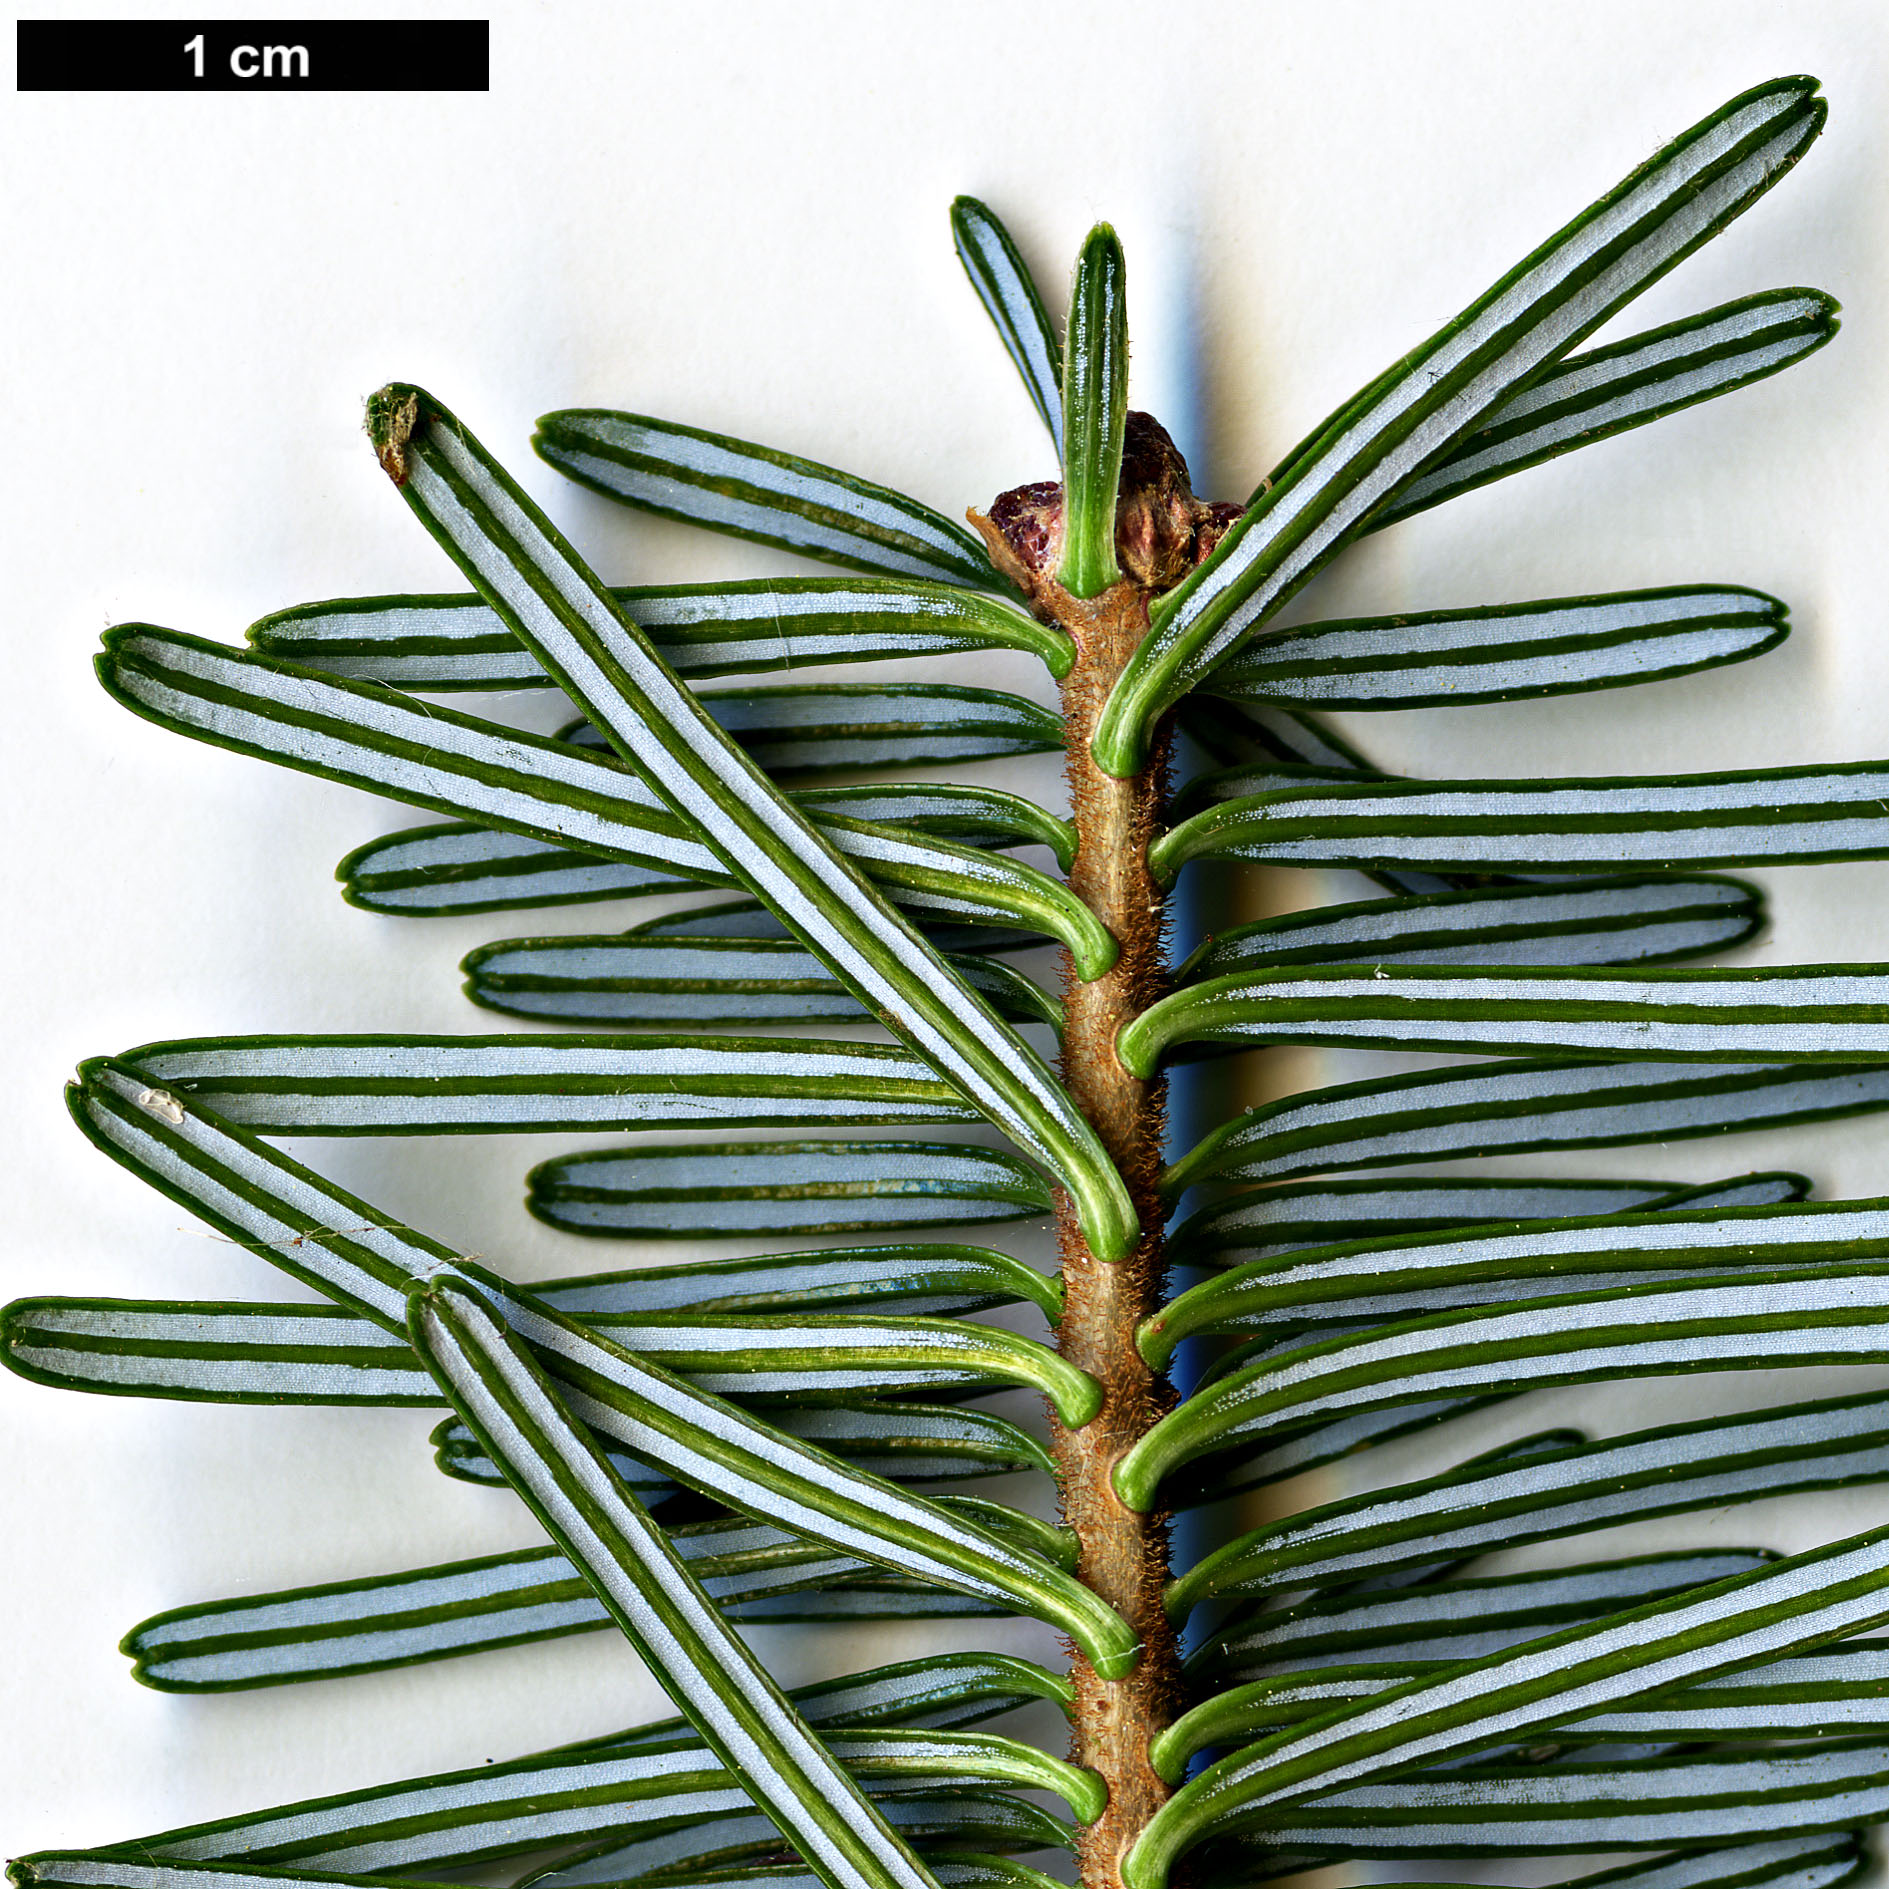 High resolution image: Family: Pinaceae - Genus: Abies - Taxon: fraseri